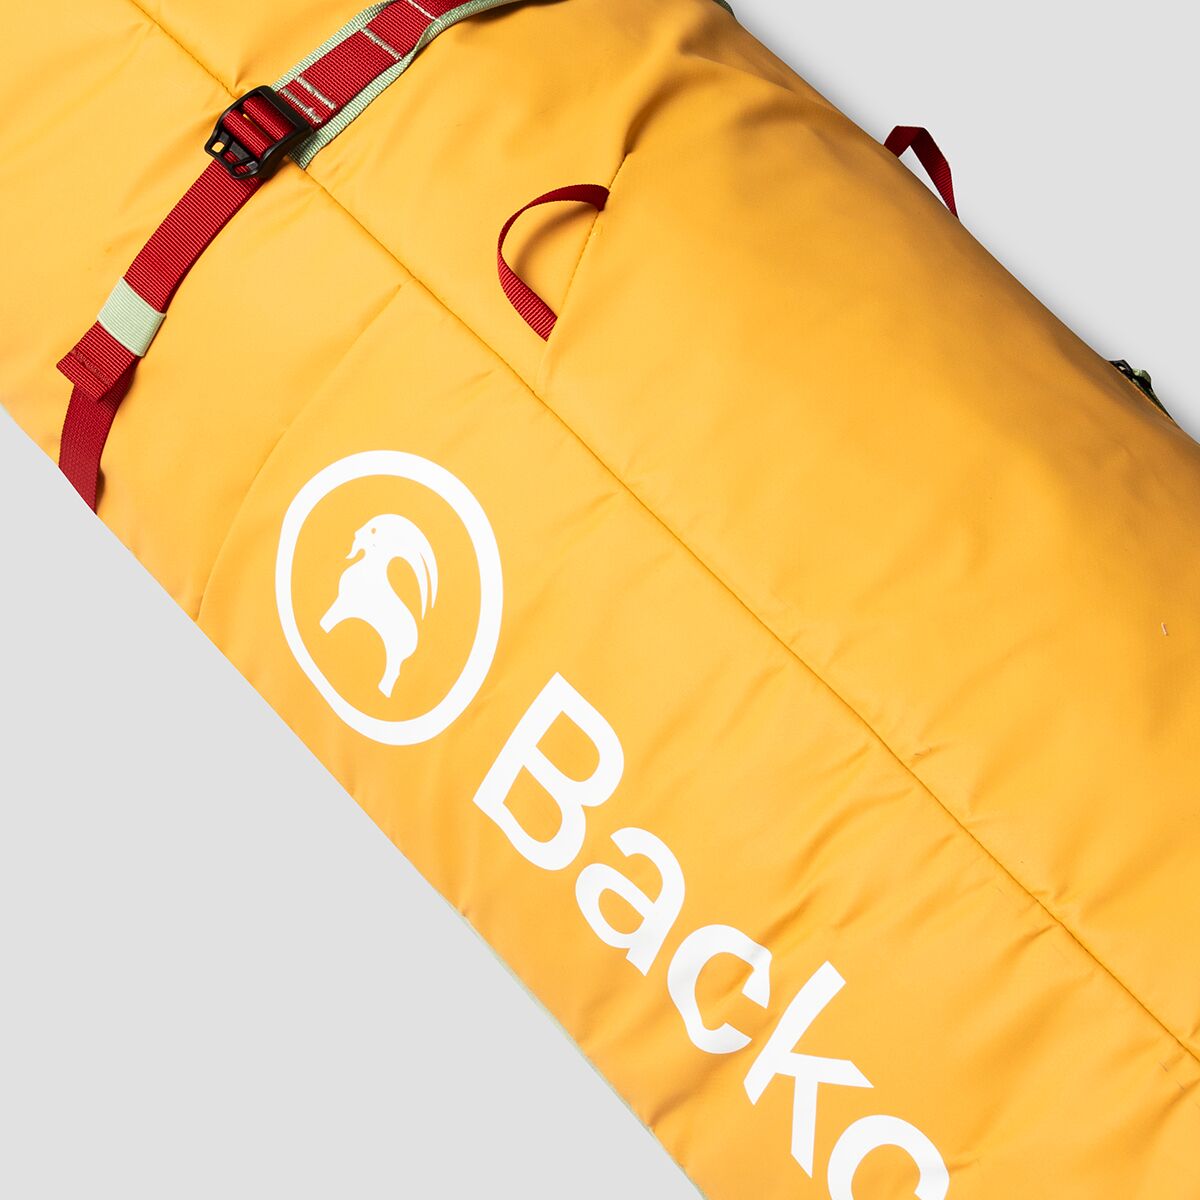 Backcountry Double Ski & Snowboard Rolling Bag in Fired Brick / Bossa Nova